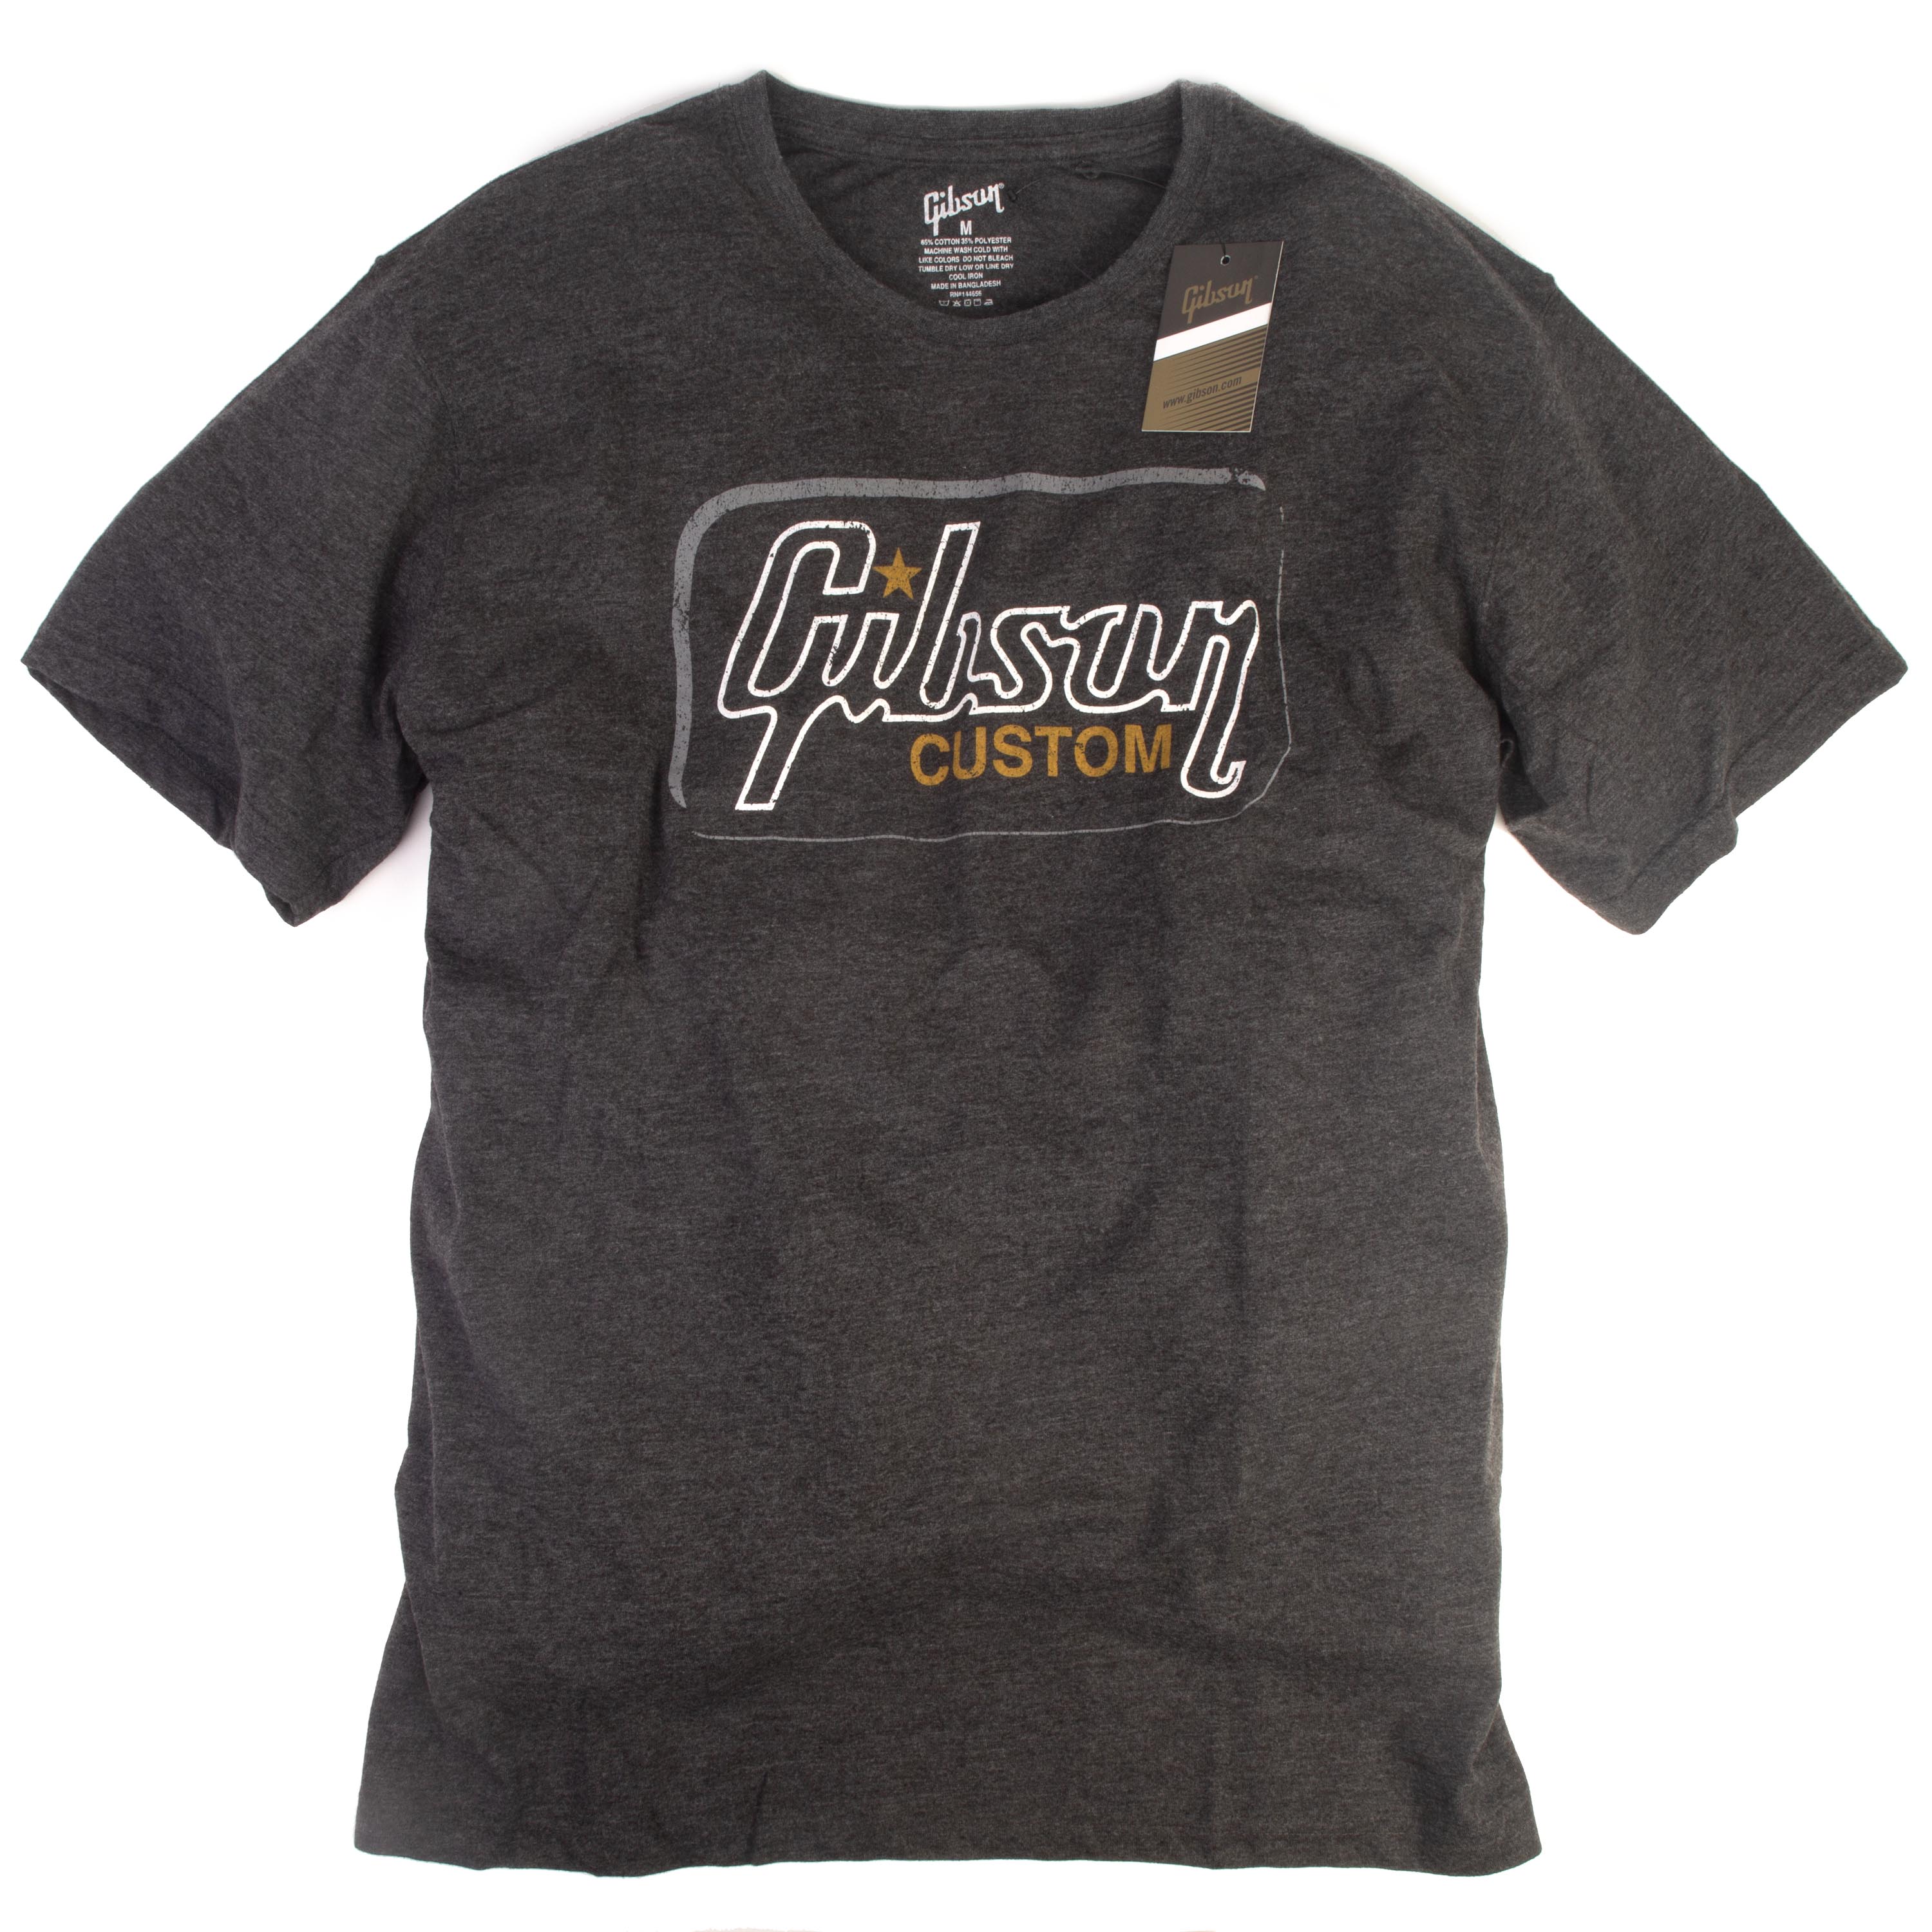 Gibson Custom Shop T-Shirt